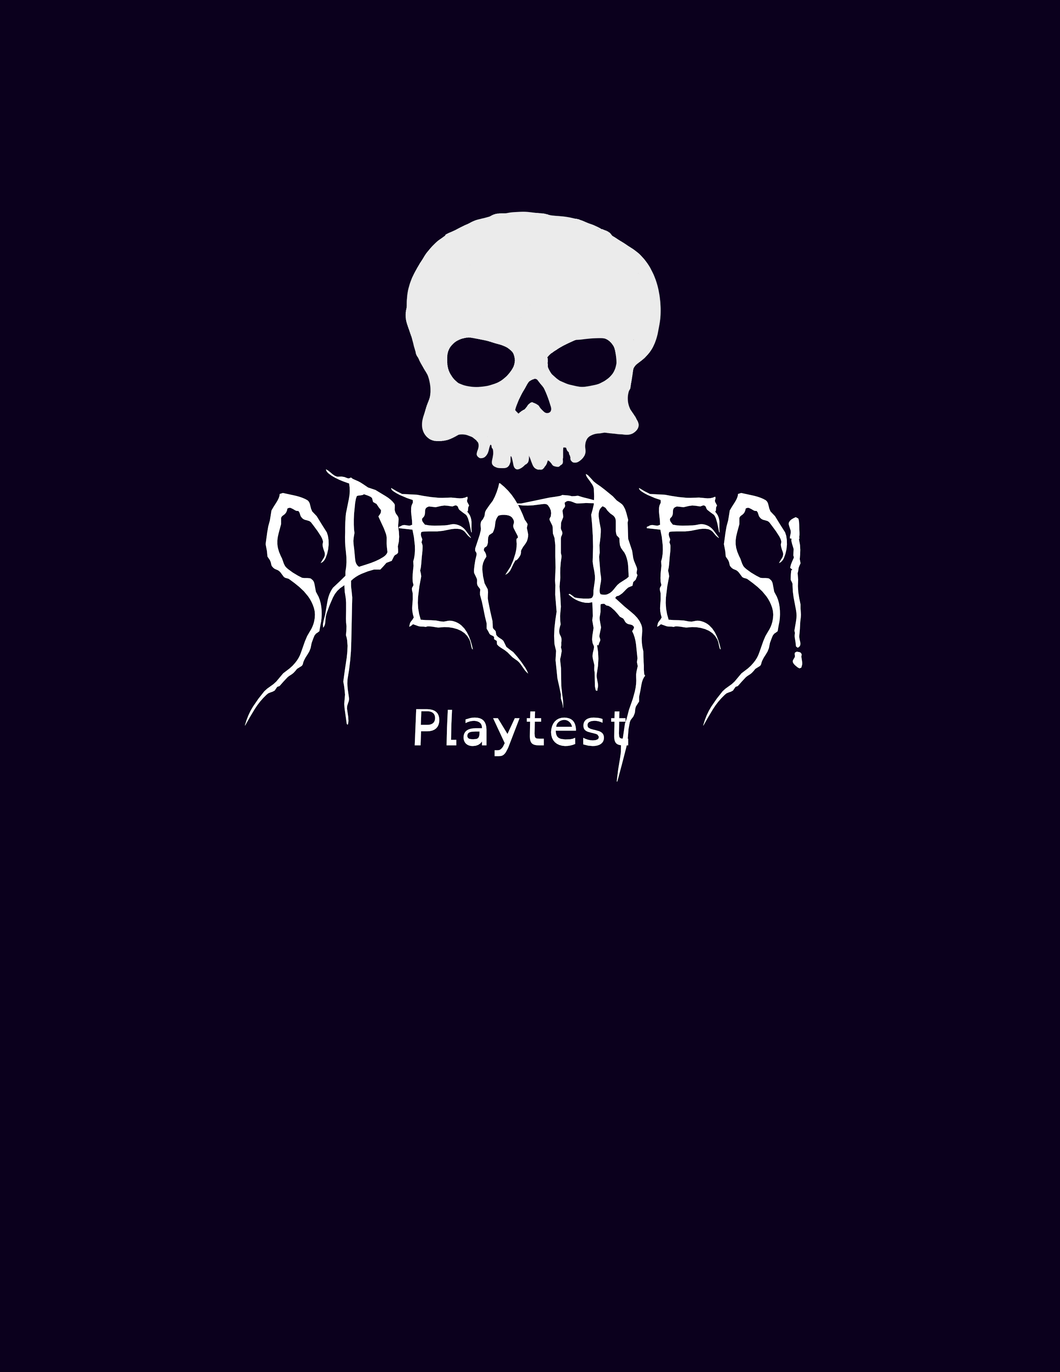 Spectres! Playtest